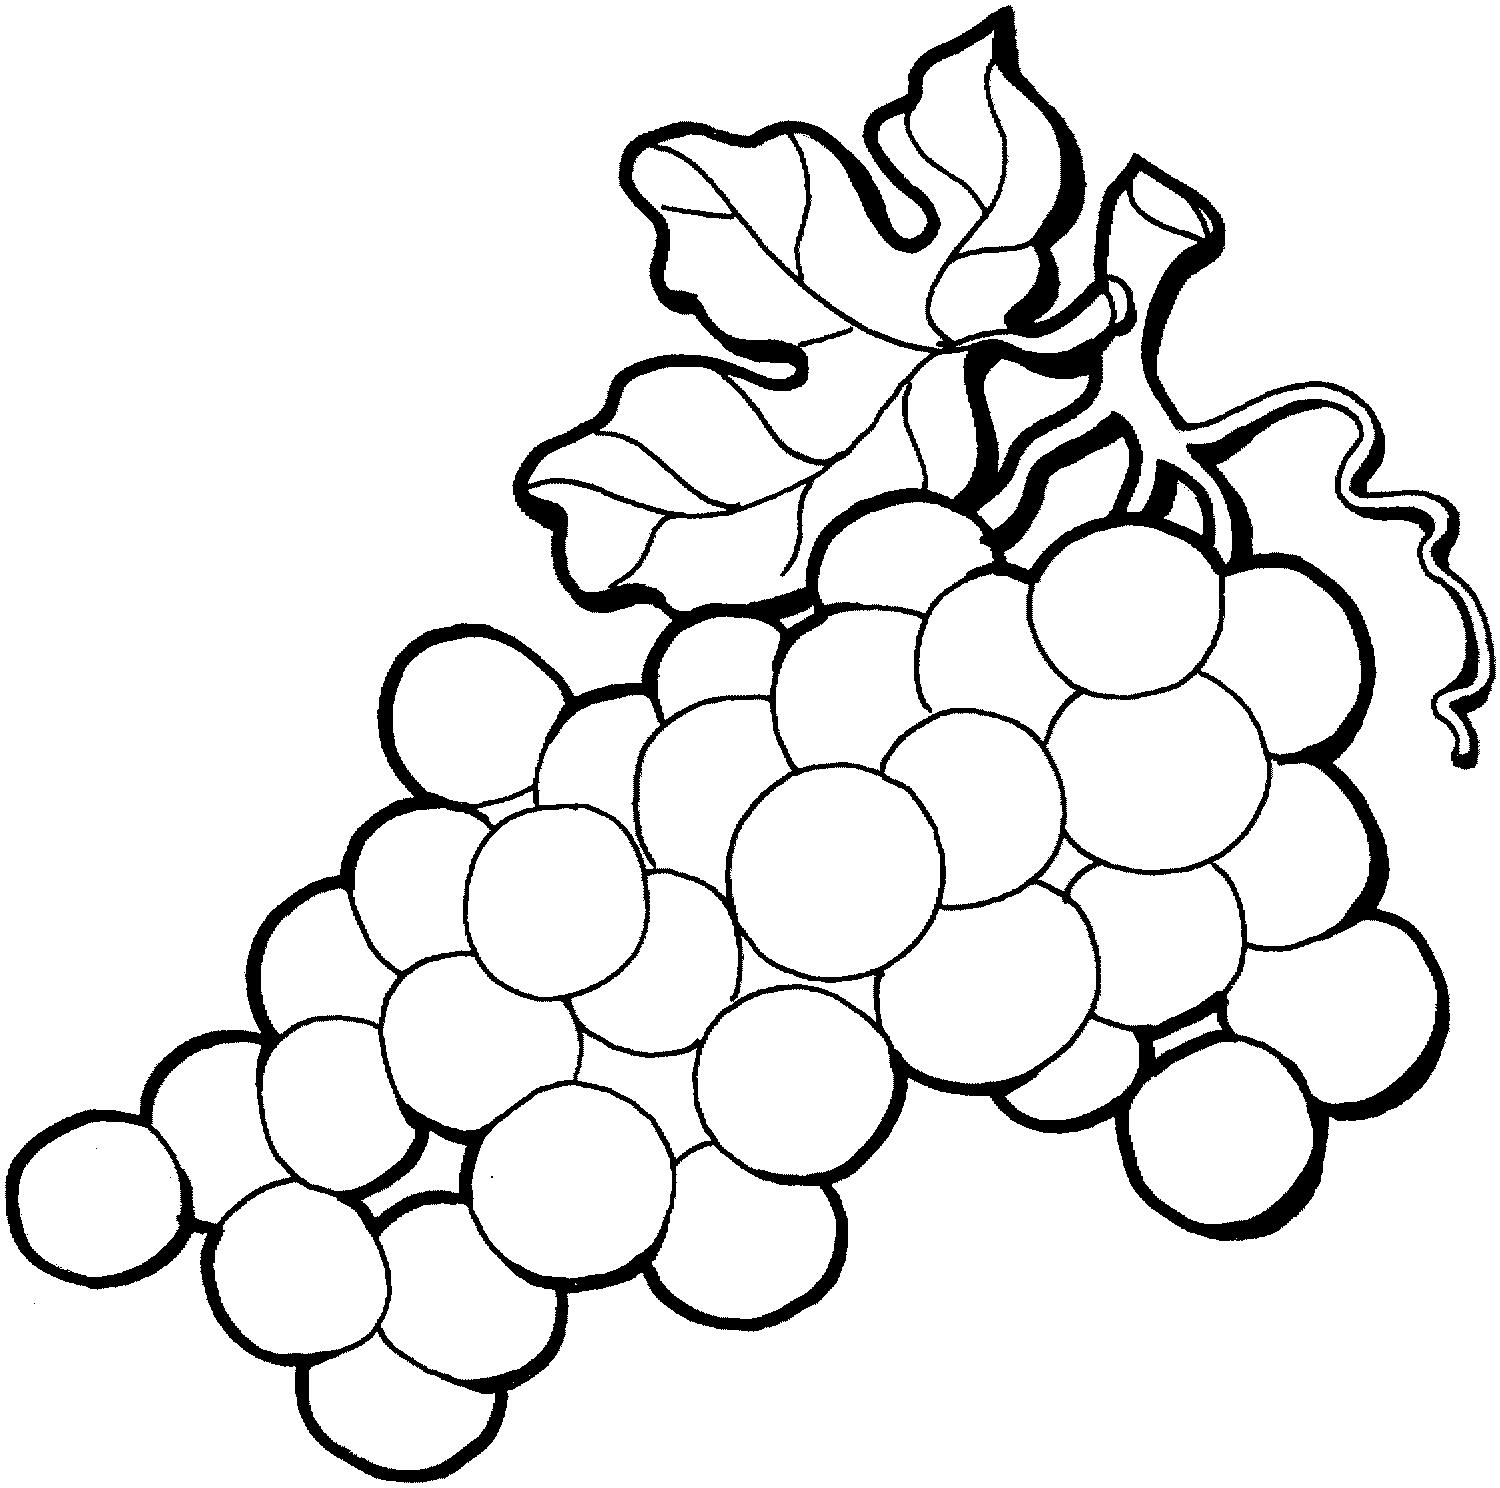 clip art black and white grapes - Clip Art Library